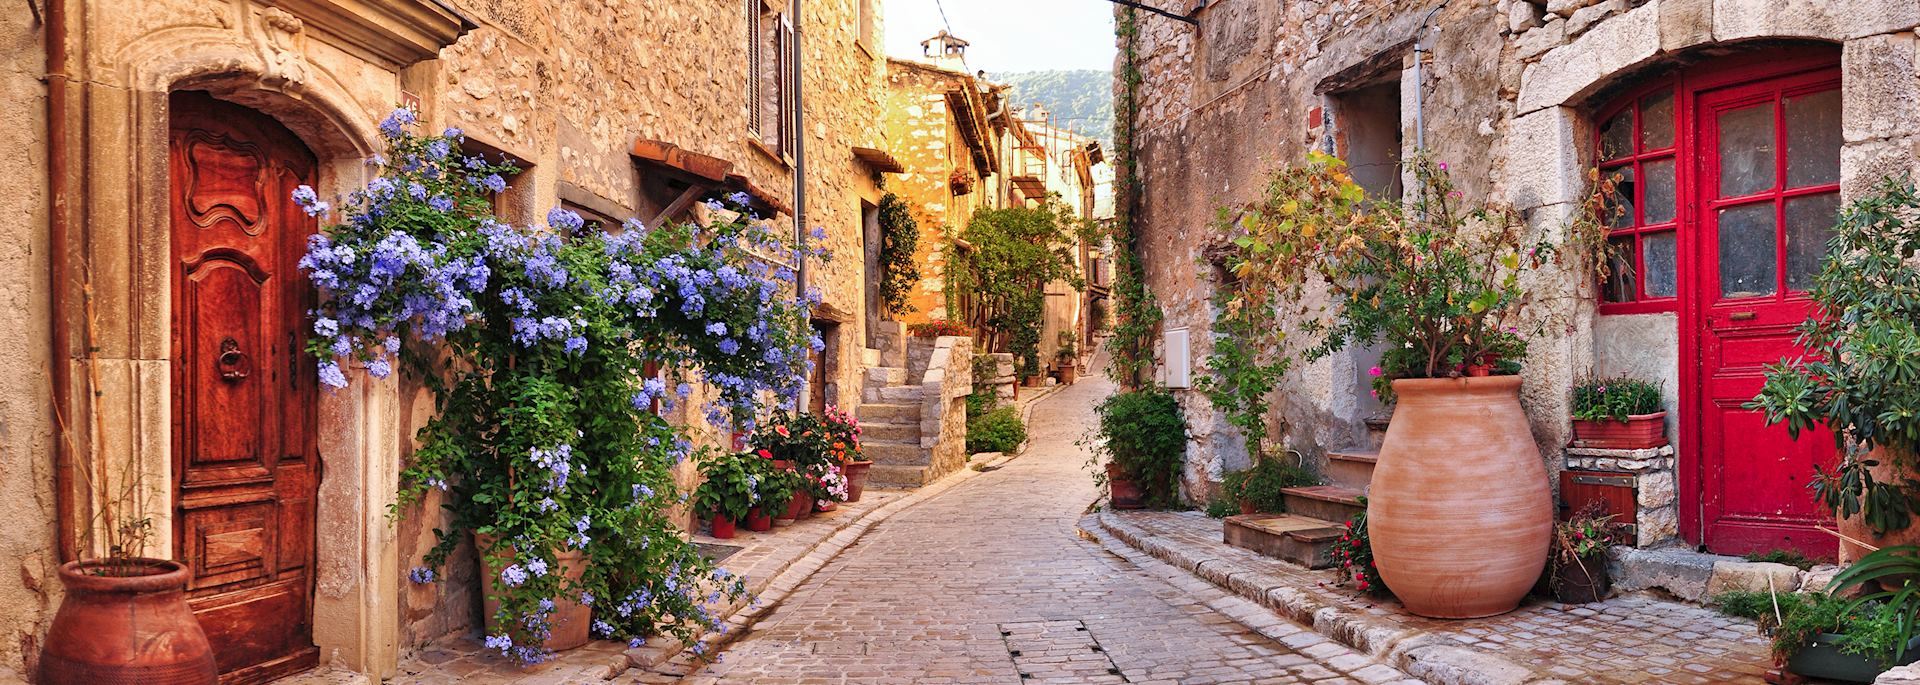 Provençal village street